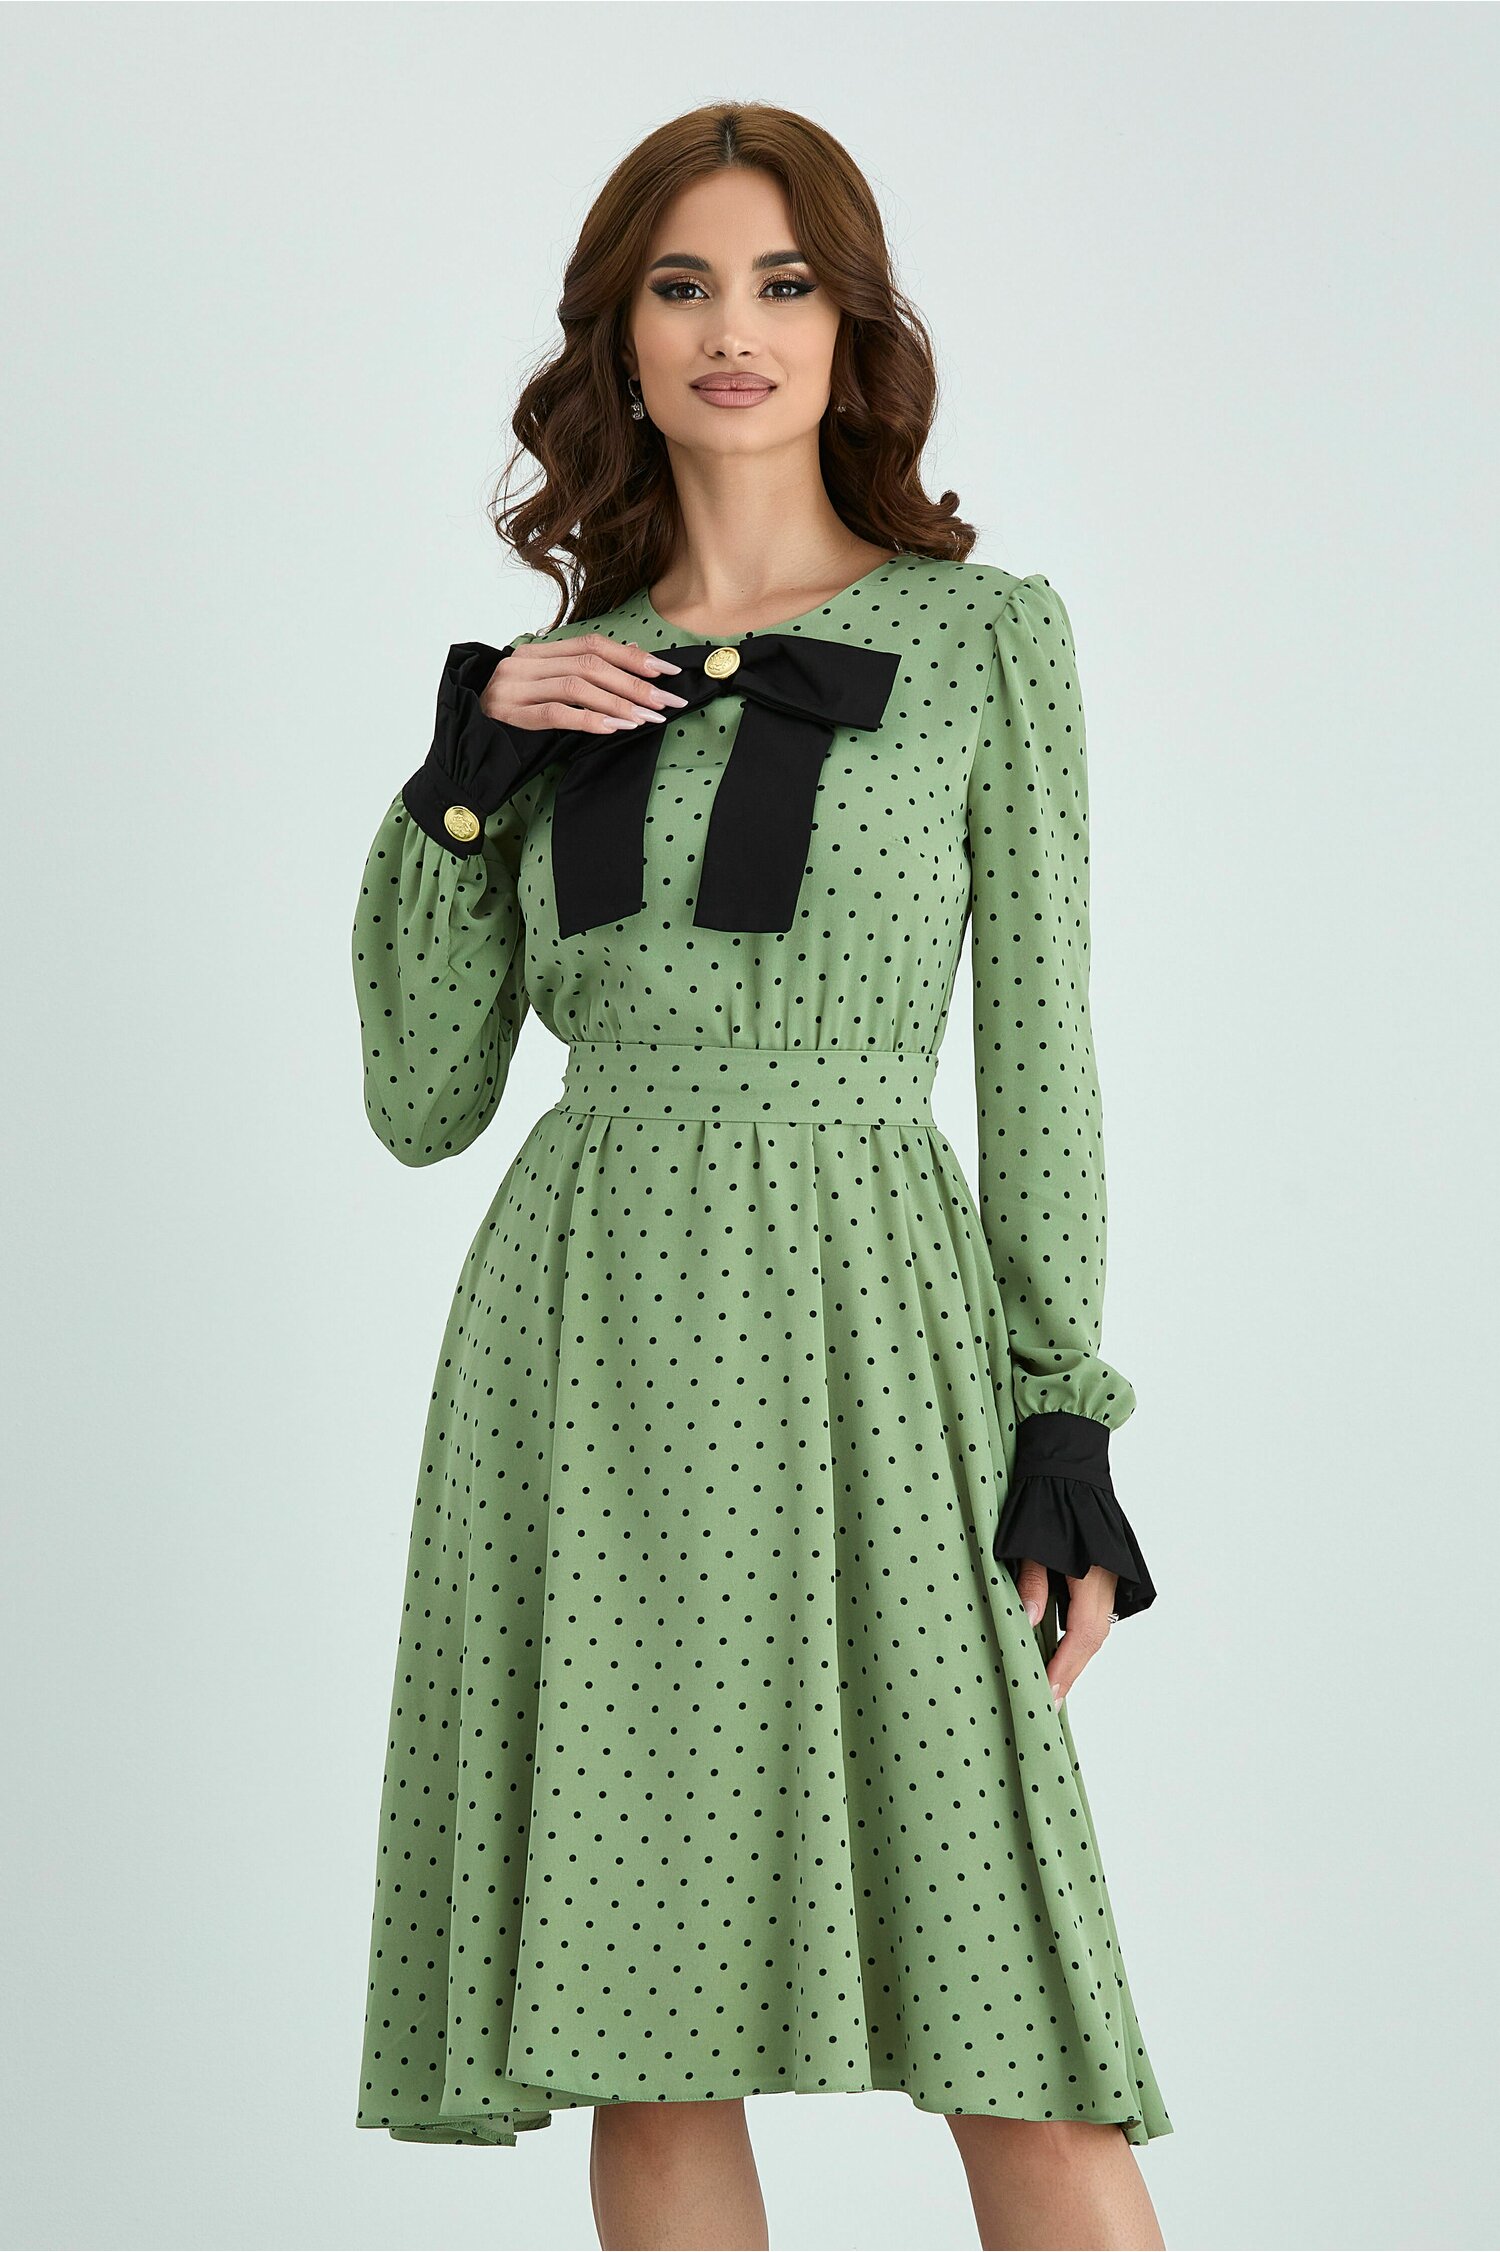 Rochie Dy Fashion verde cu buline si mansete negre dyfashion.ro imagine 2022 13clothing.ro